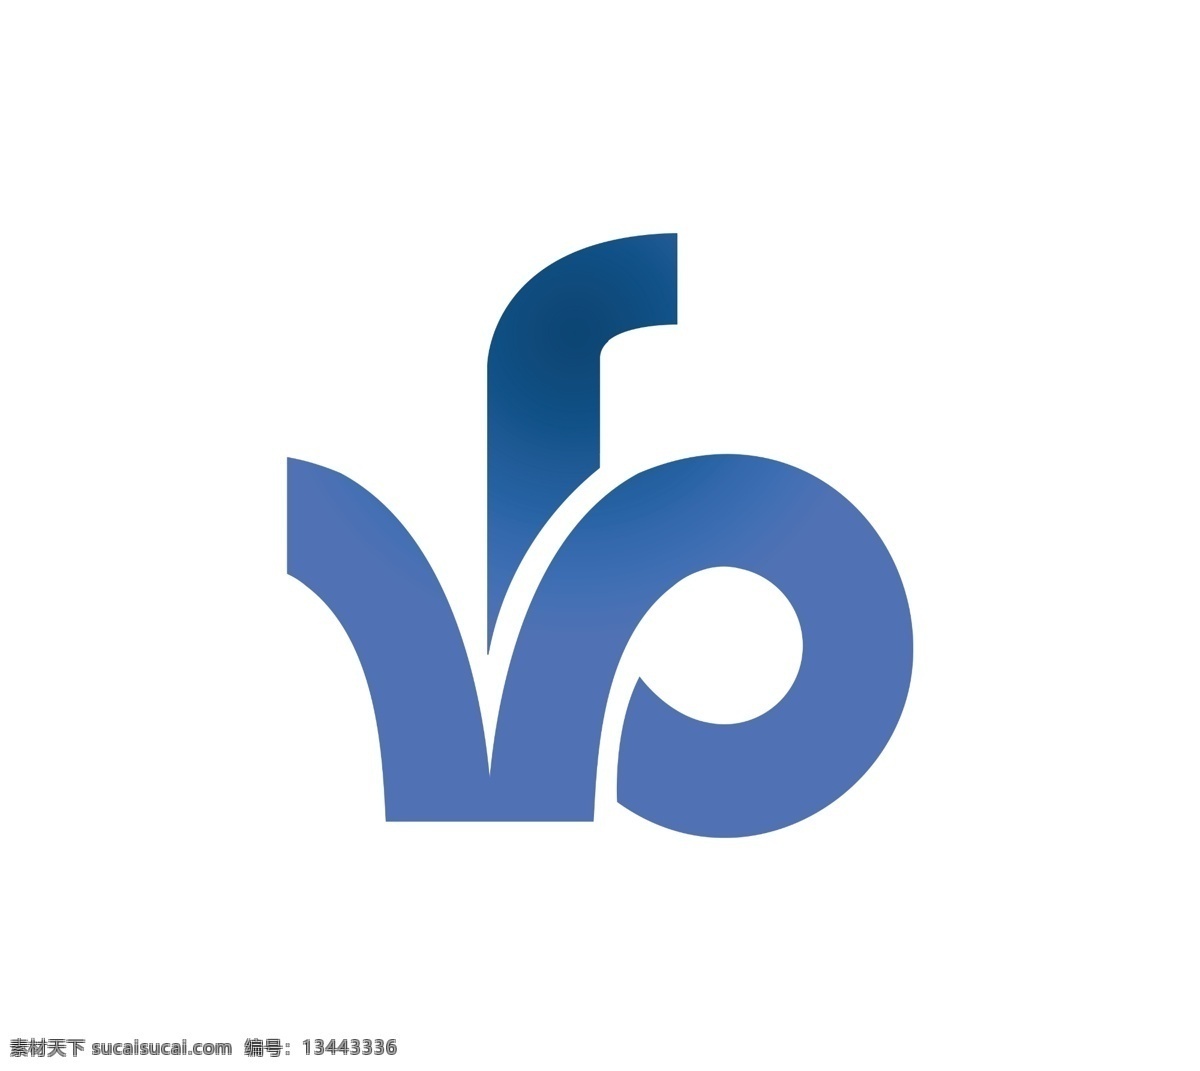 英文logo 文字logo 蓝色logo 数字logo 6logo vlogo logo 商业设计